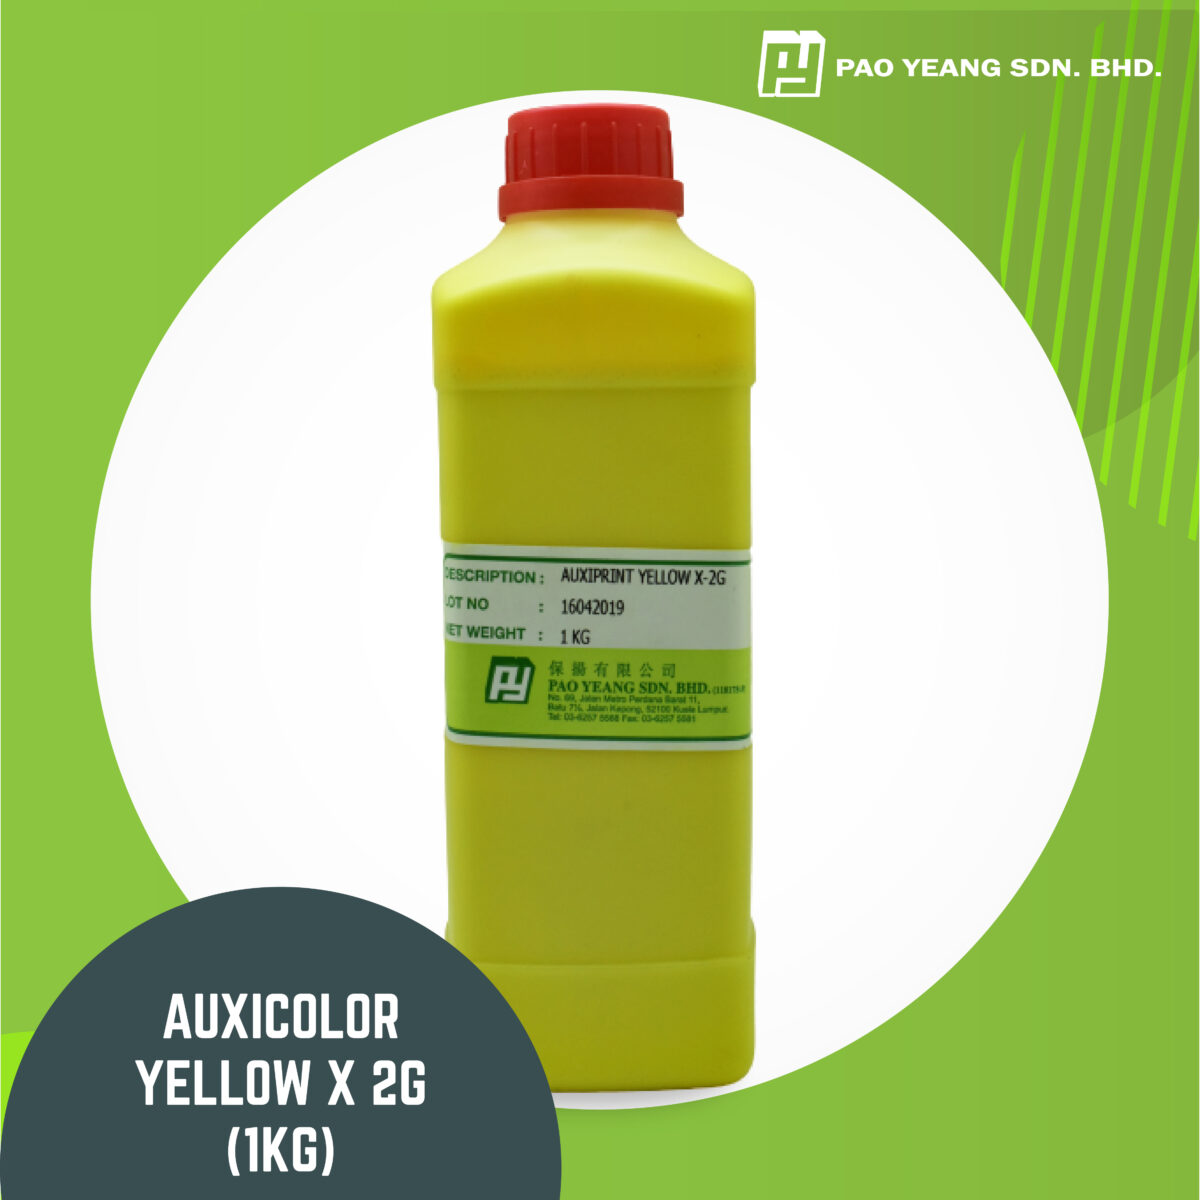 auxicolor yellow x 2g